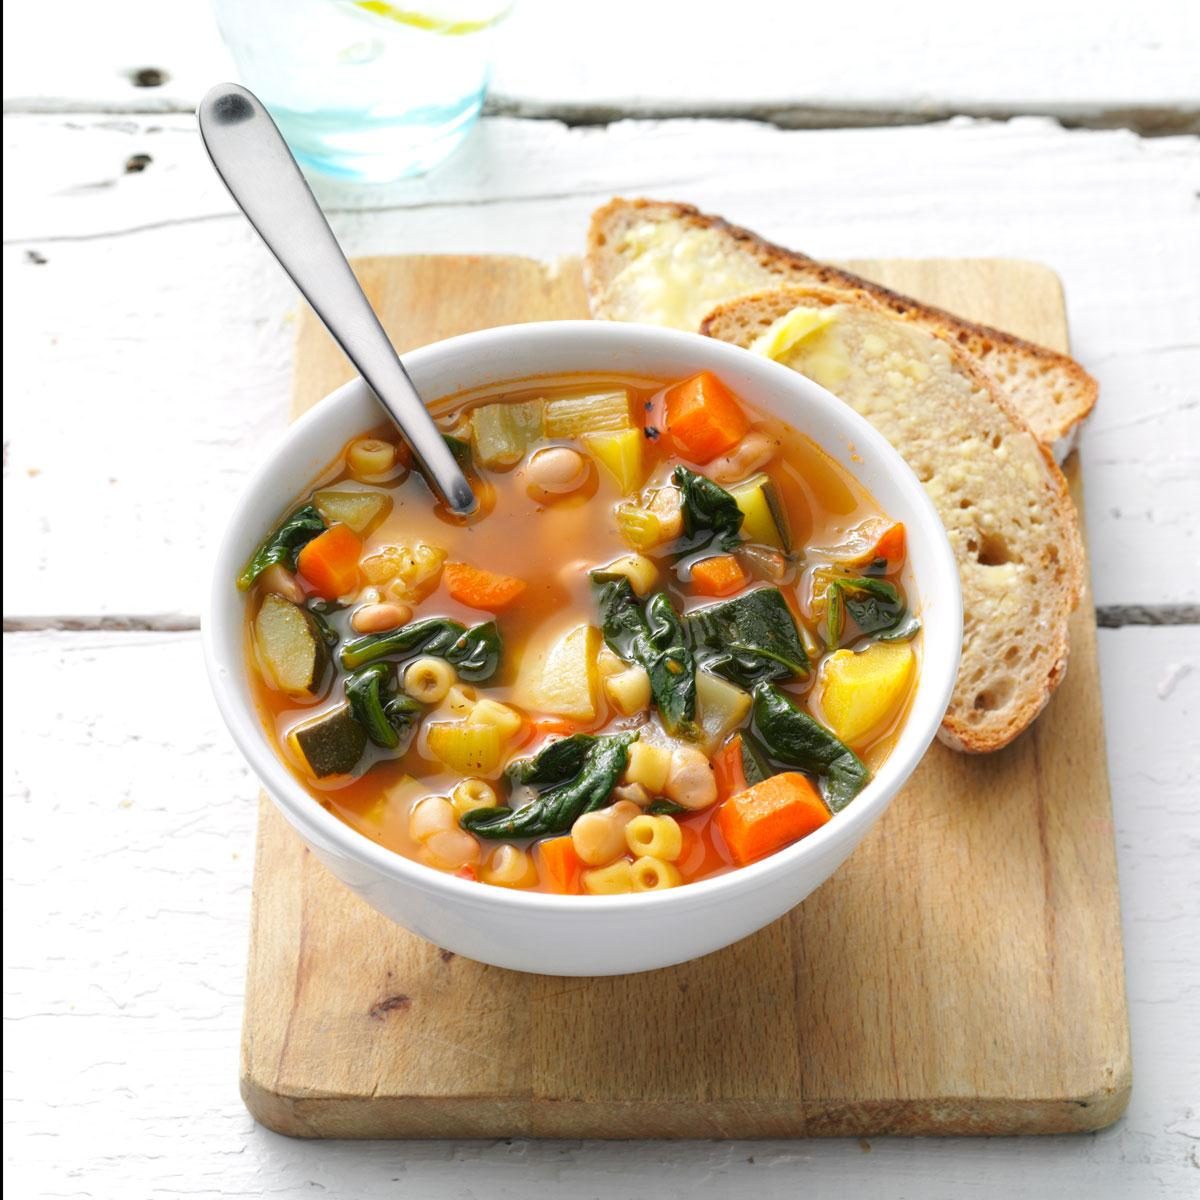 soup's on! 3 garden-to-freezer recipes - A Way To Garden